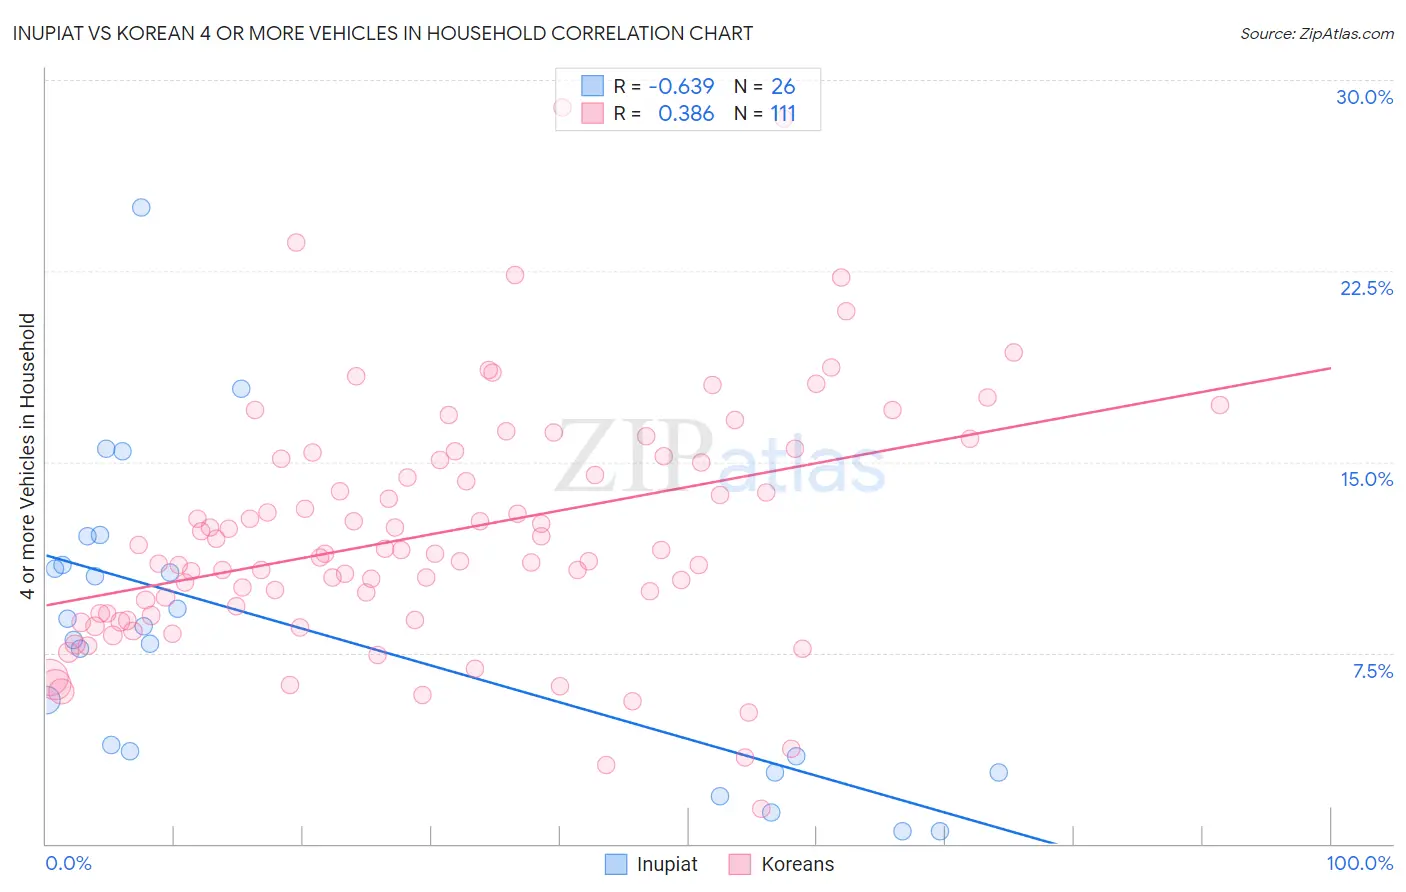 Inupiat vs Korean 4 or more Vehicles in Household